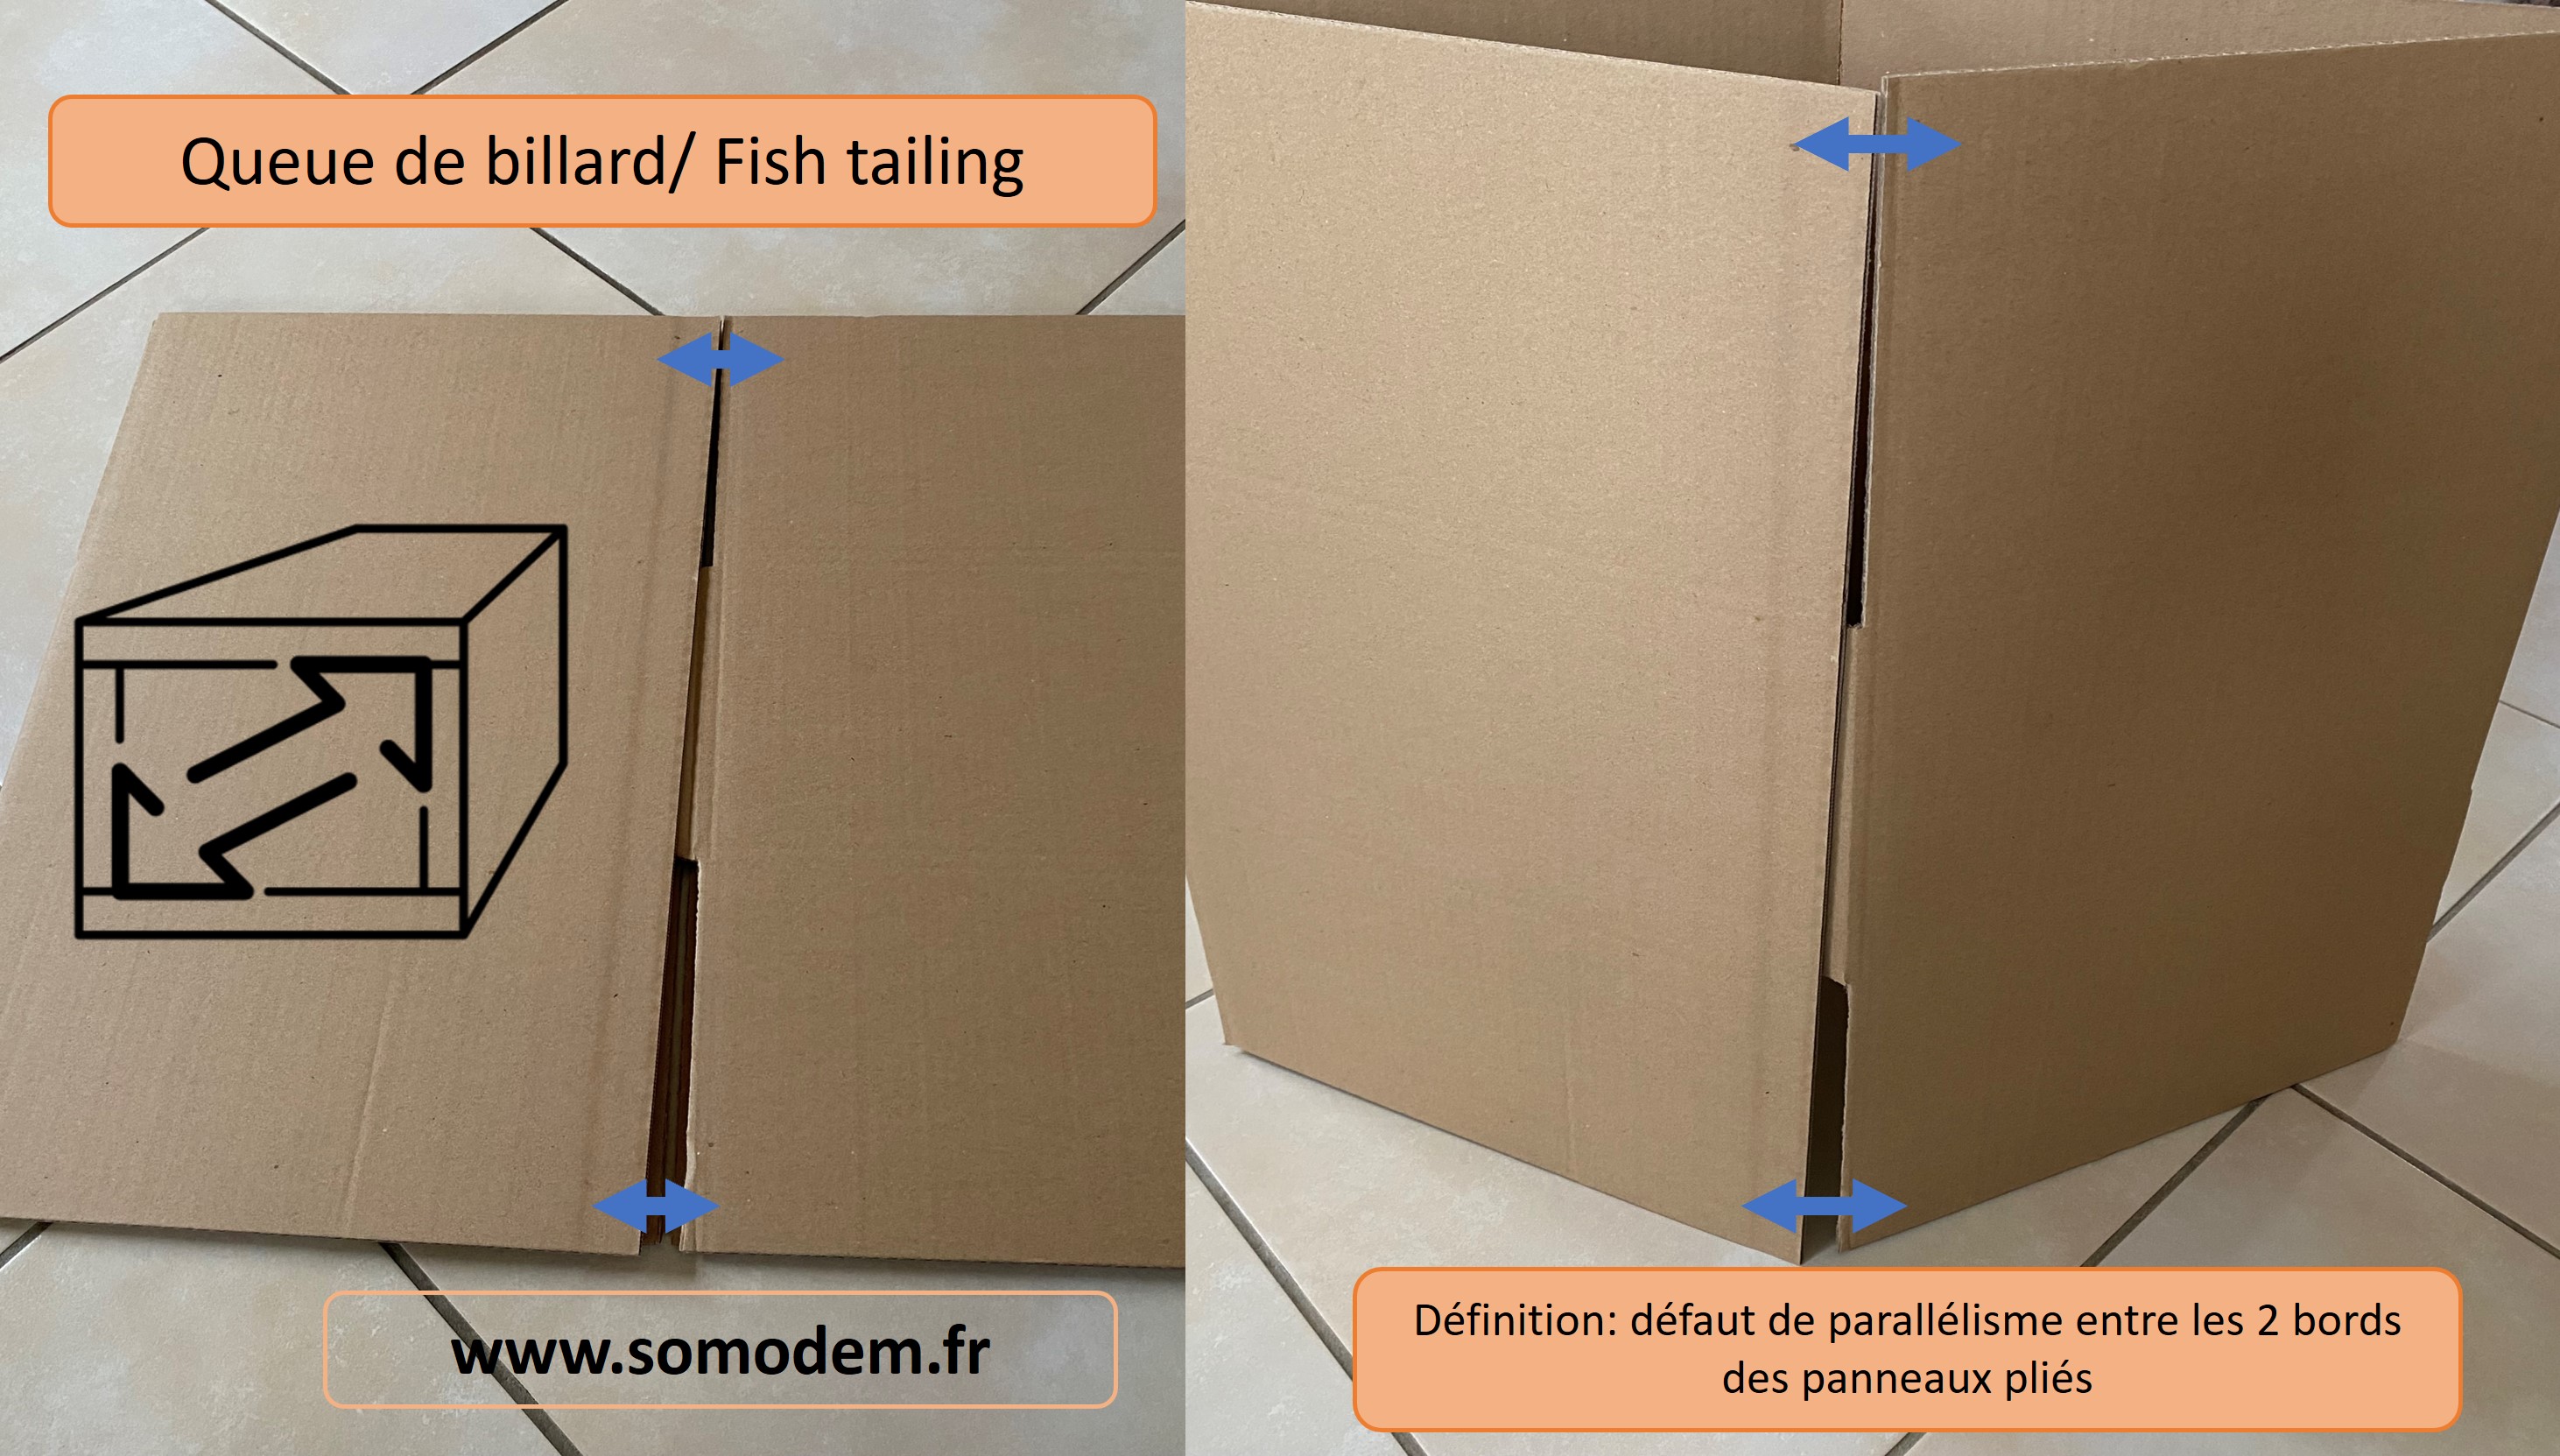 https://www.somodem.fr/web/IMG/jpg/queue_de_billard_-_fish_tailing.jpg